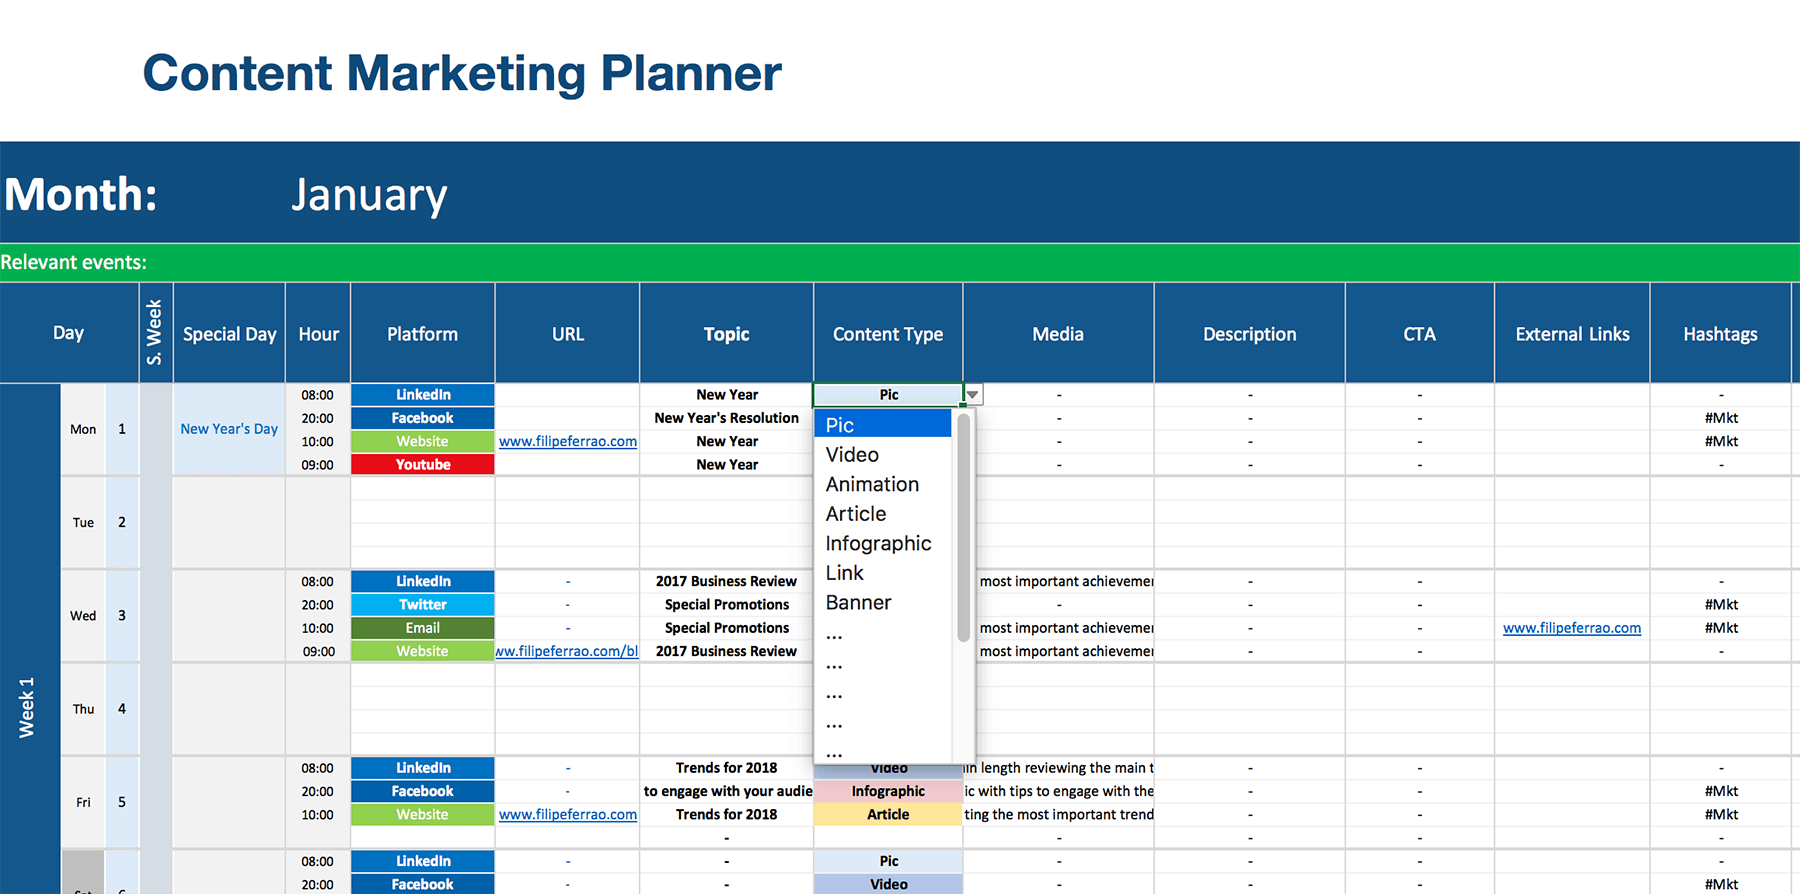 Content Marketing Planner